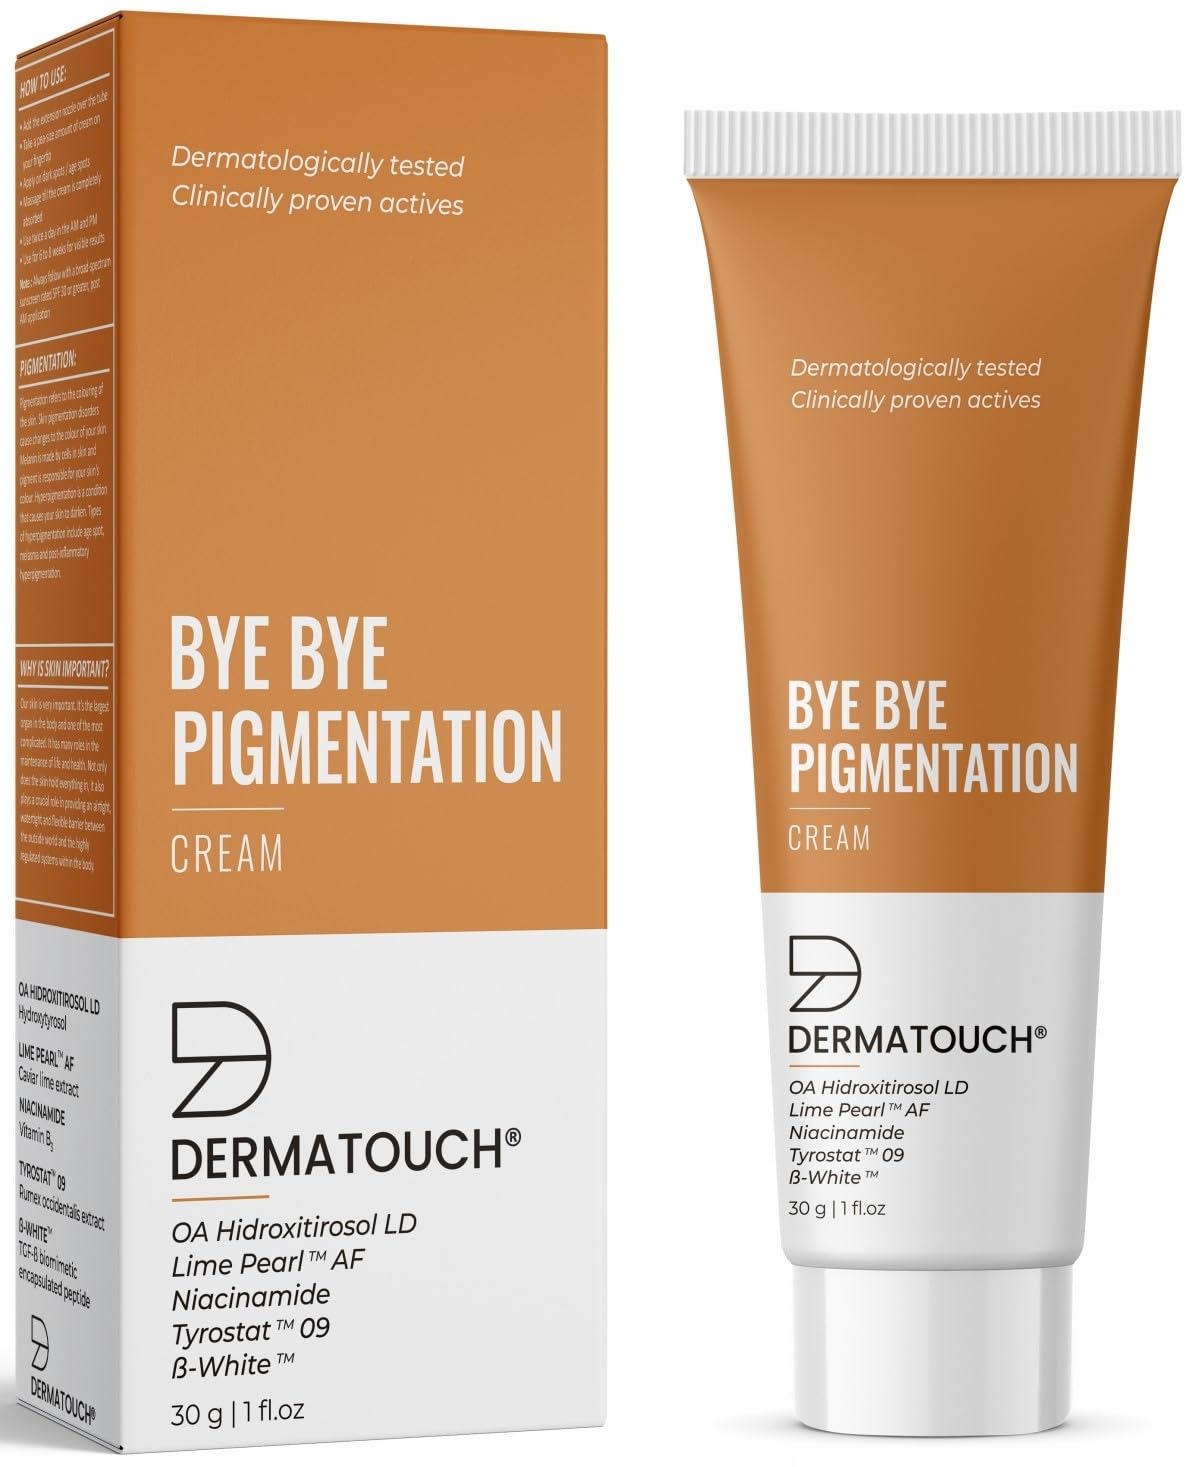 Dermatouch Bye Bye Pigmentation Cream